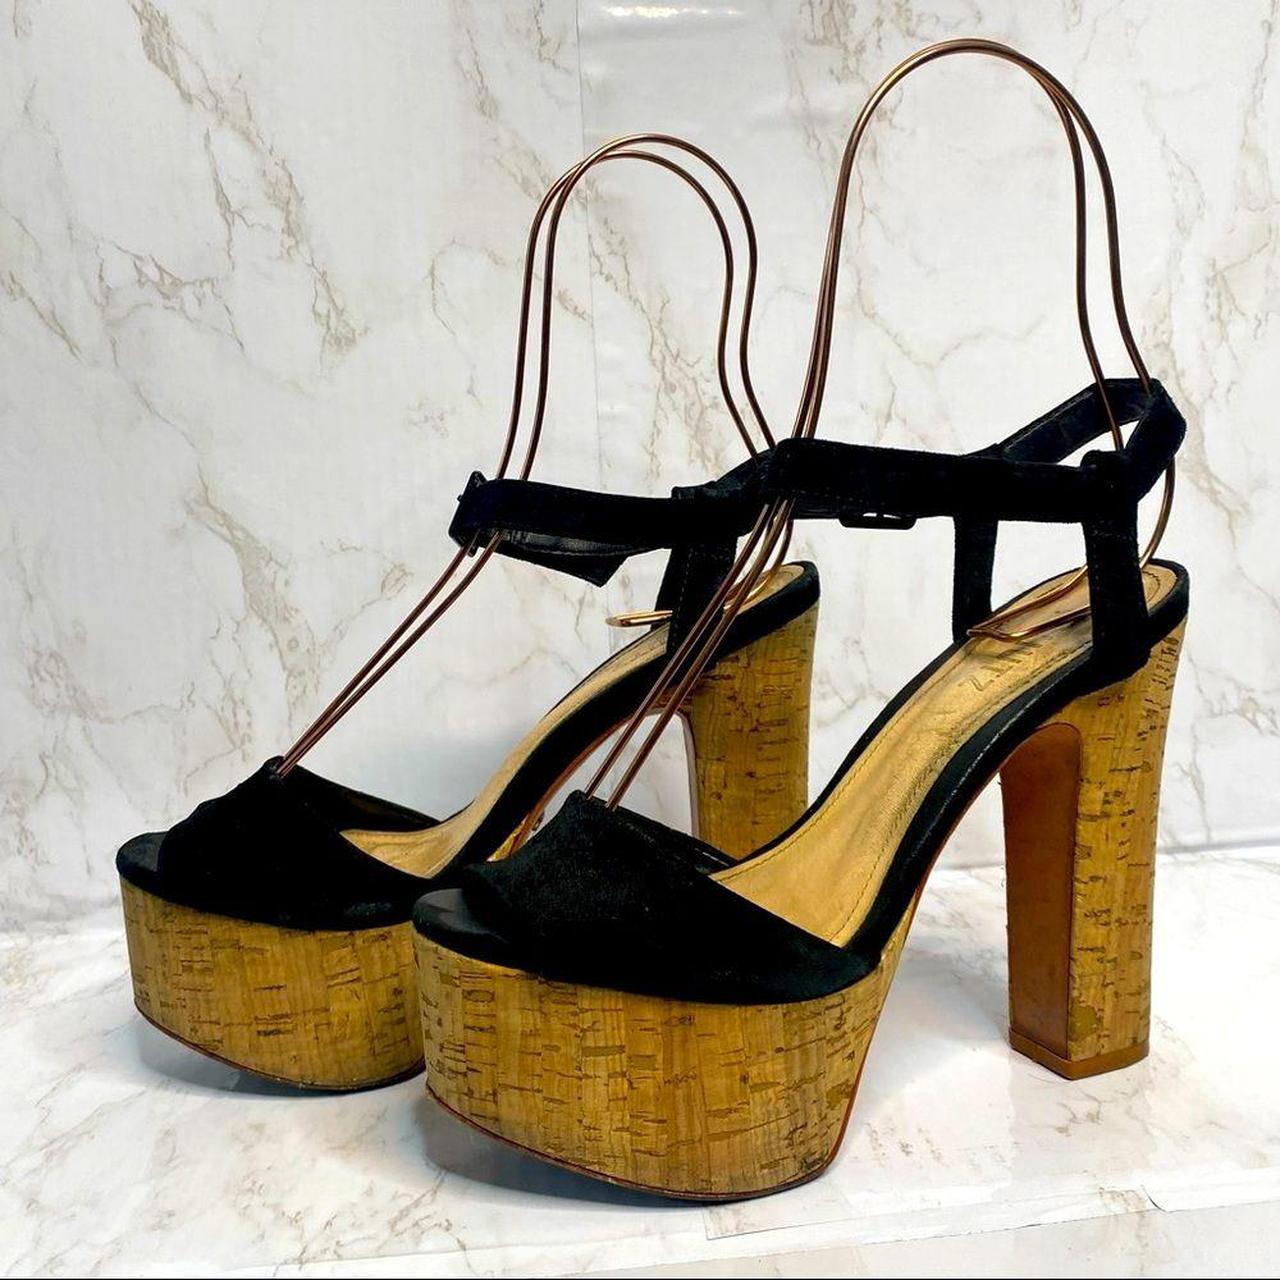 Product Image 1 - Gorgeous high heel platform sandals